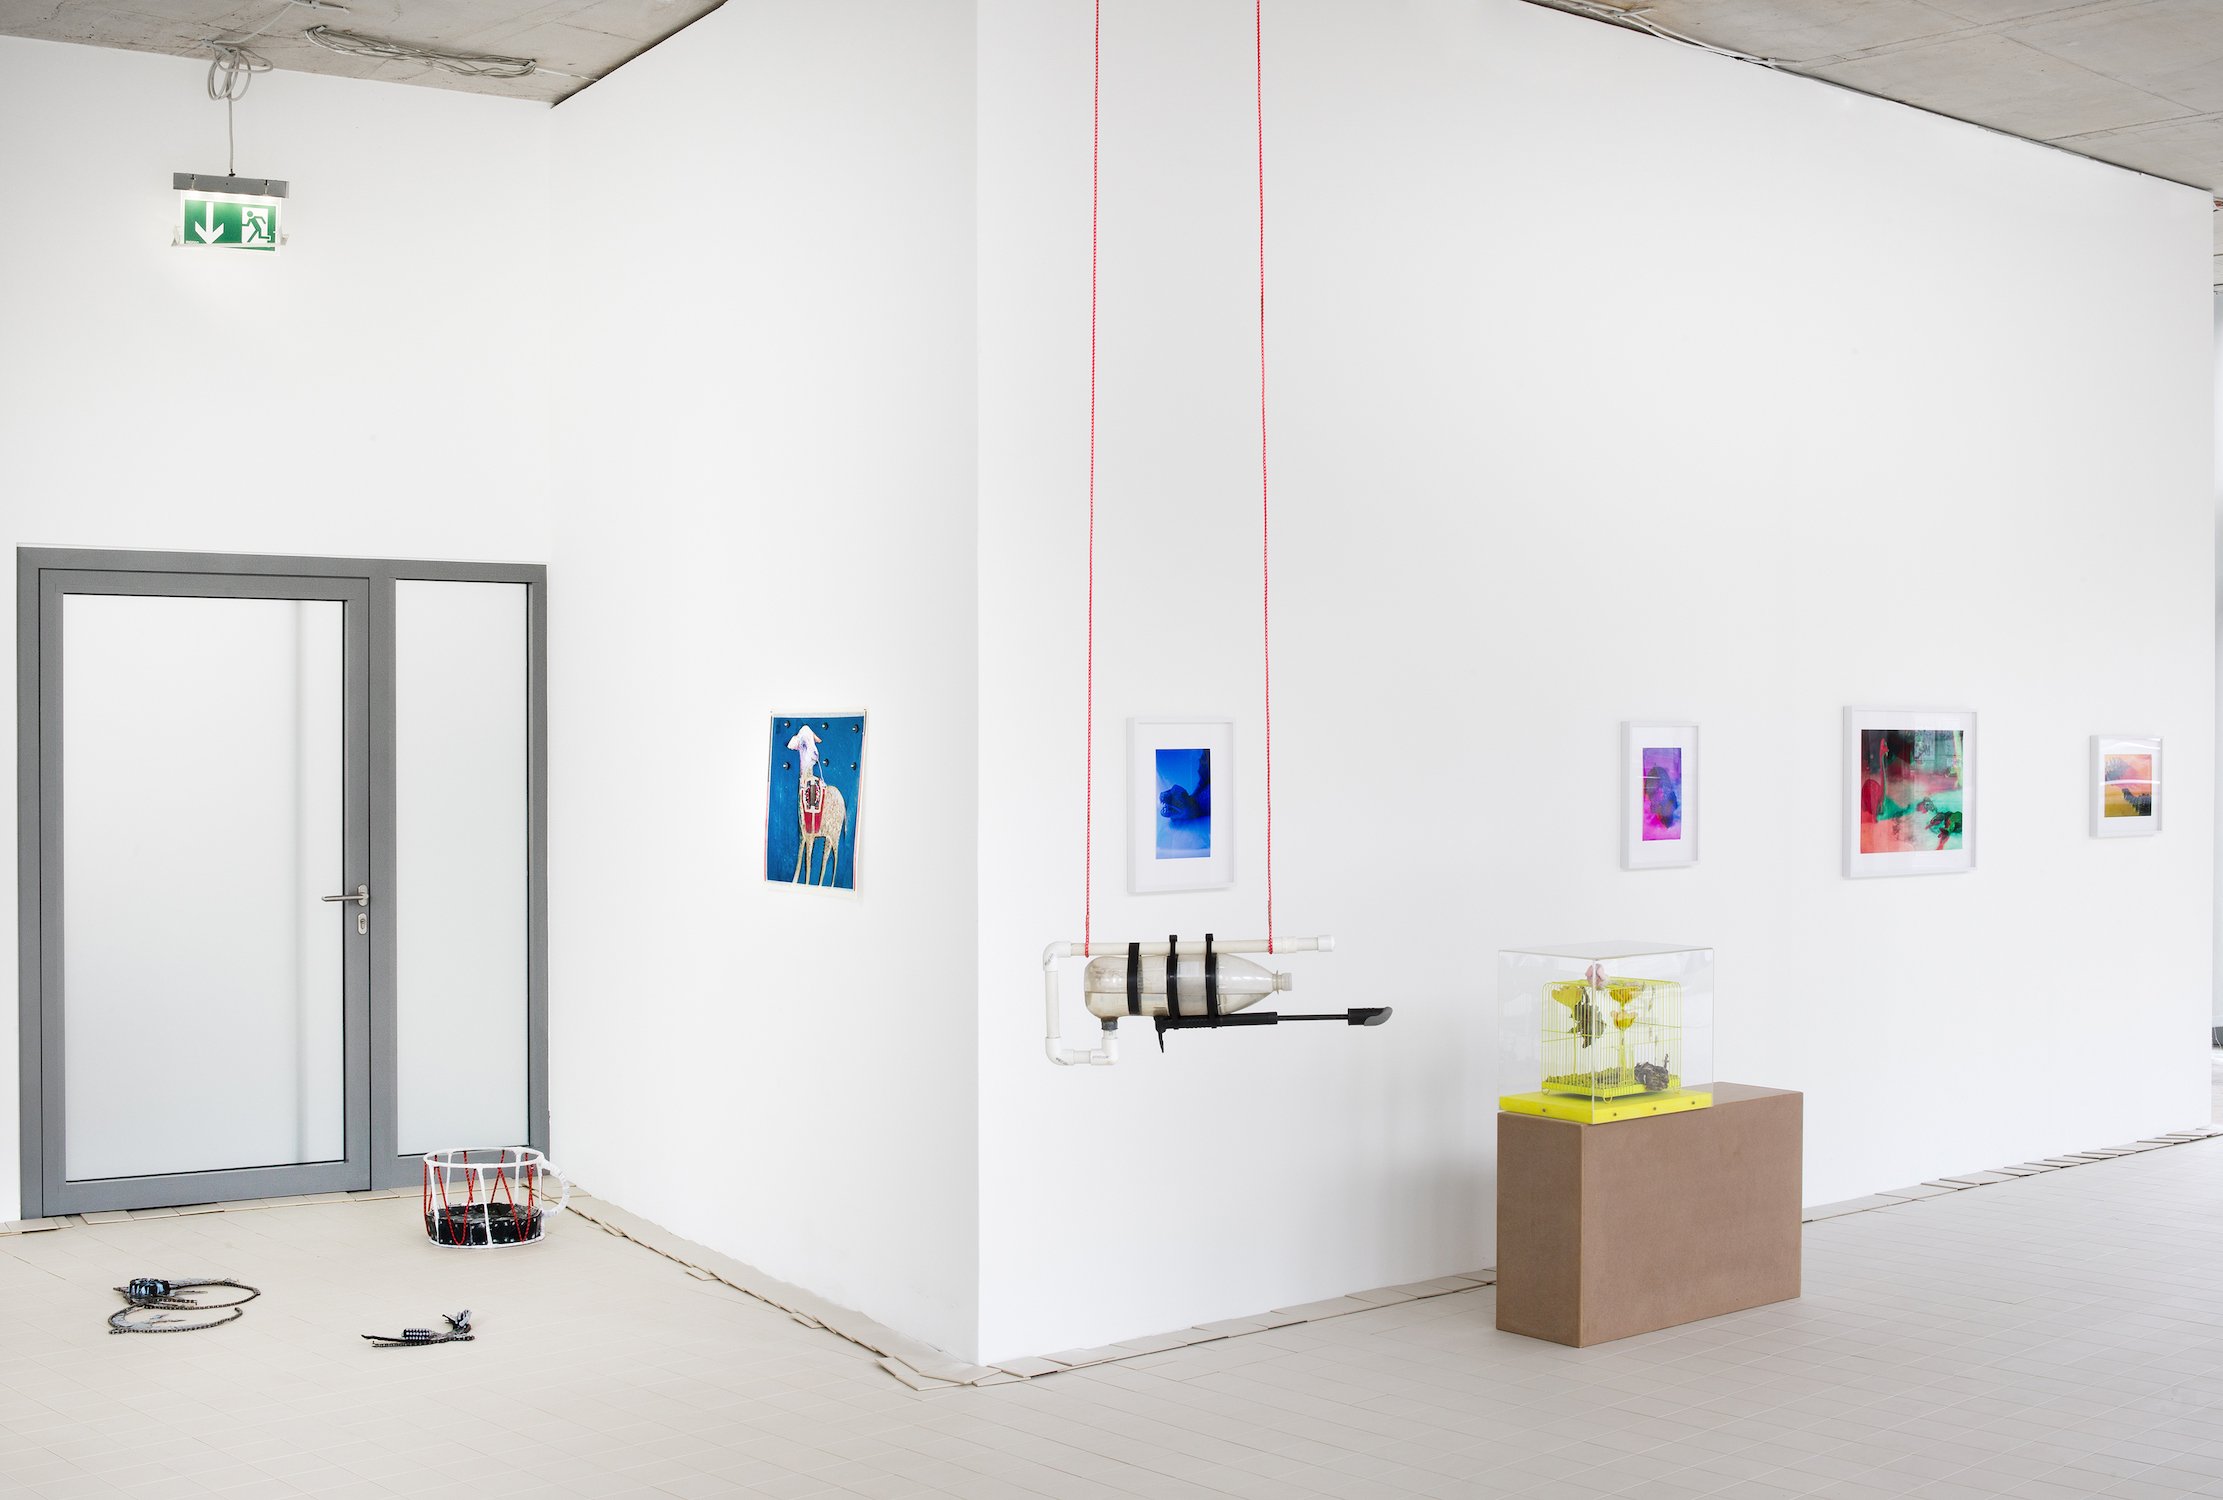  Wet Resistance (pictured works by Anna Solal, Darling Salinas-Lopez, Tetsumi Kudo, Julian Irlinger)  at the Dortmunder Kunstverein. August, 2022 